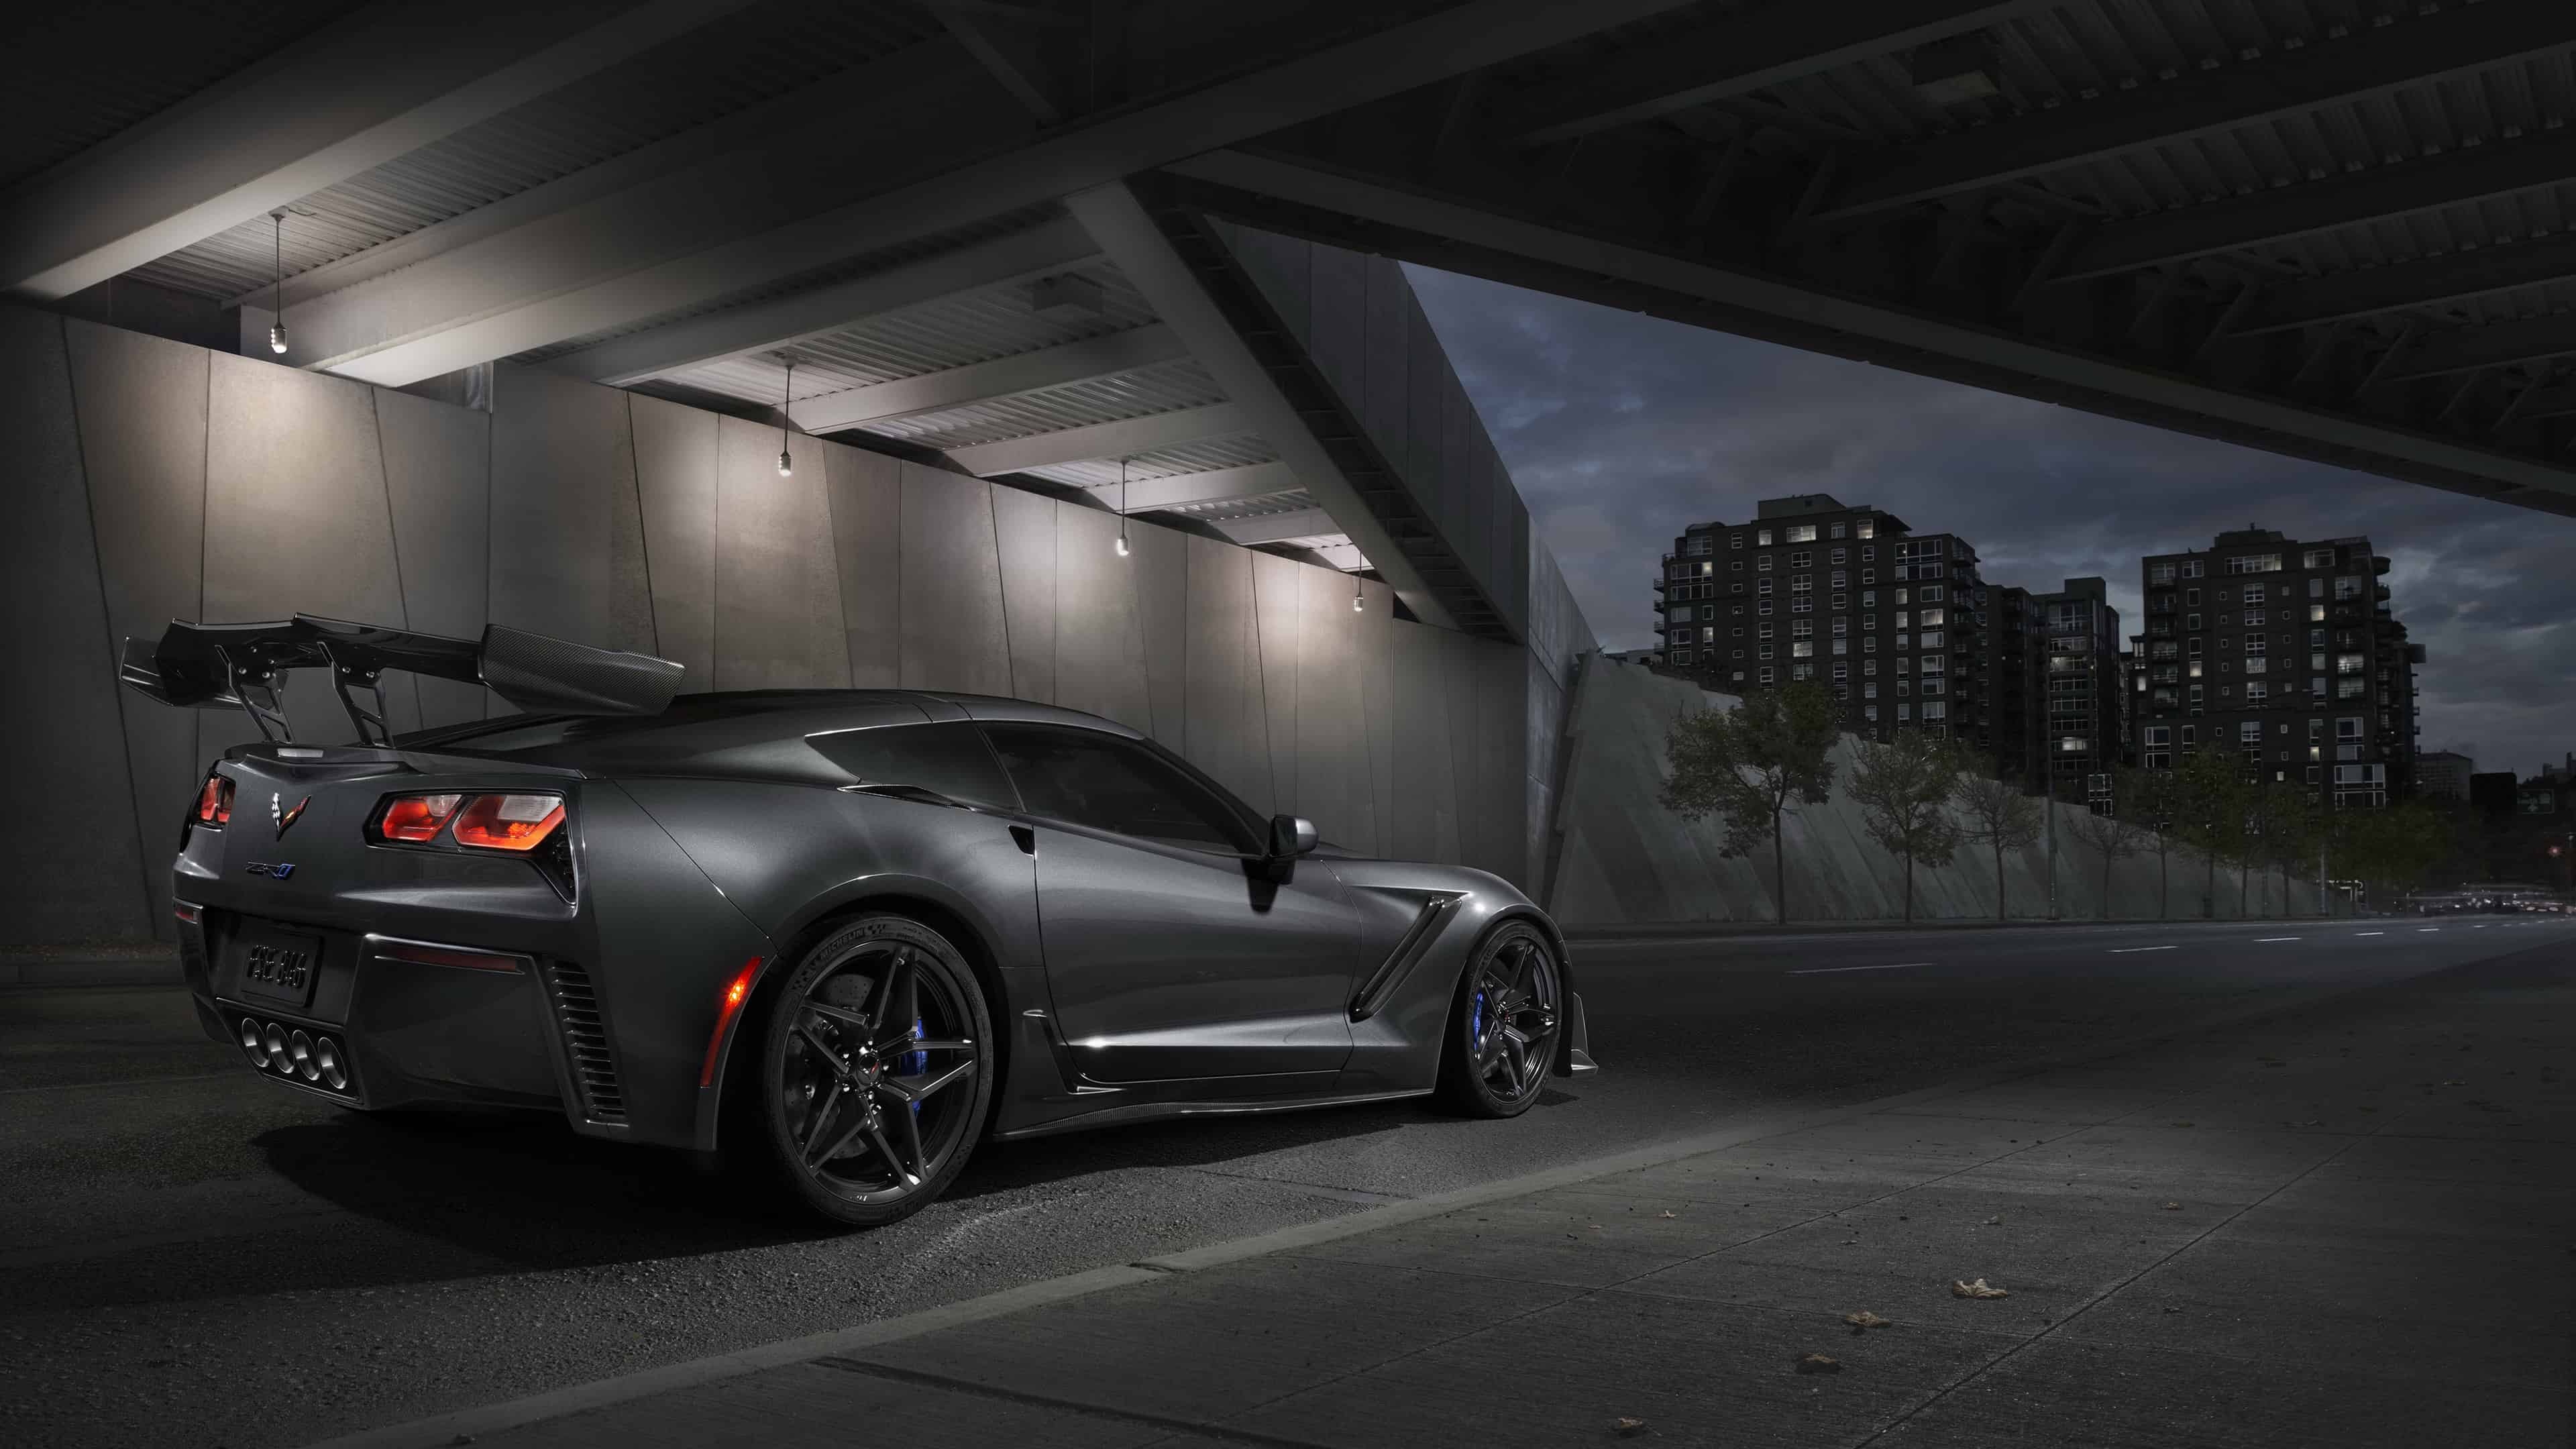 Corvette: Metallic black Chevrolet ZR1 2019, Carbon rear wing, Racing rims, High-speed driving at night. 3840x2160 4K Background.